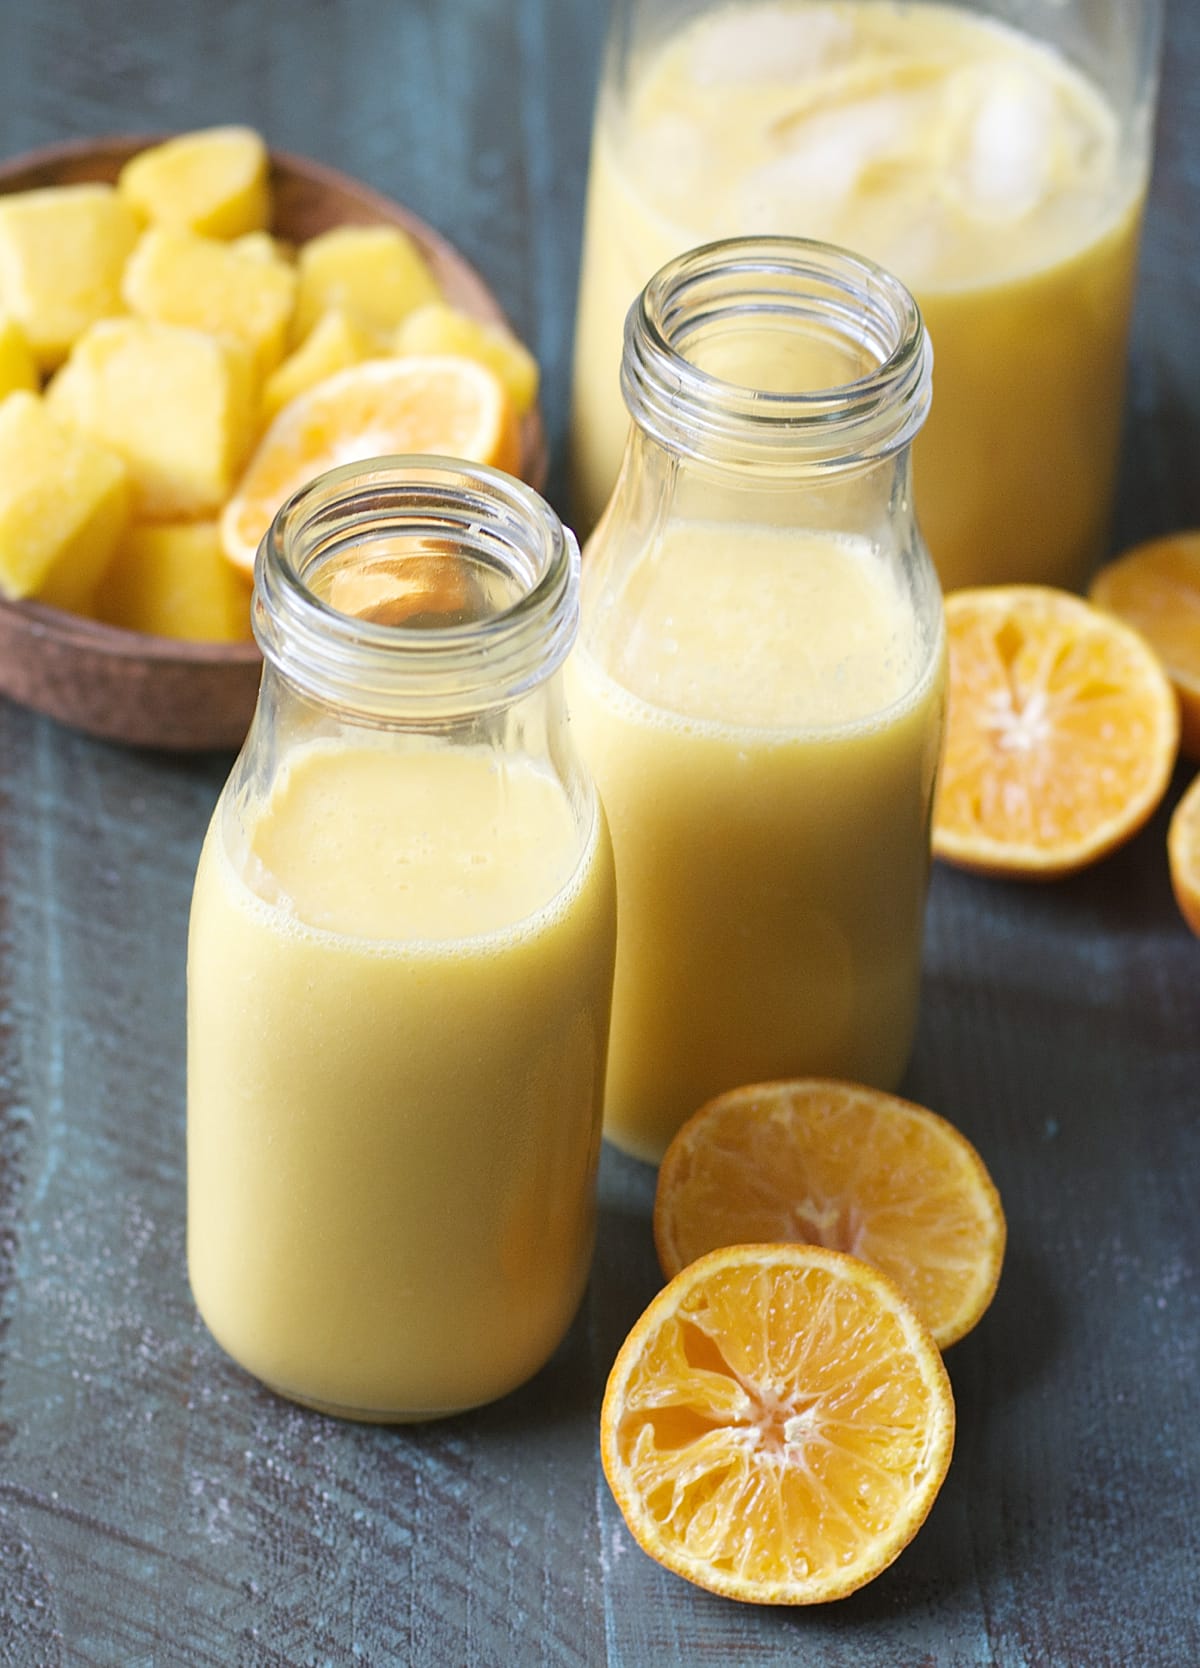 This sweet and creamy Citrus Vanilla Smoothie is packed with orange juice, mango, vanilla and almond milk!